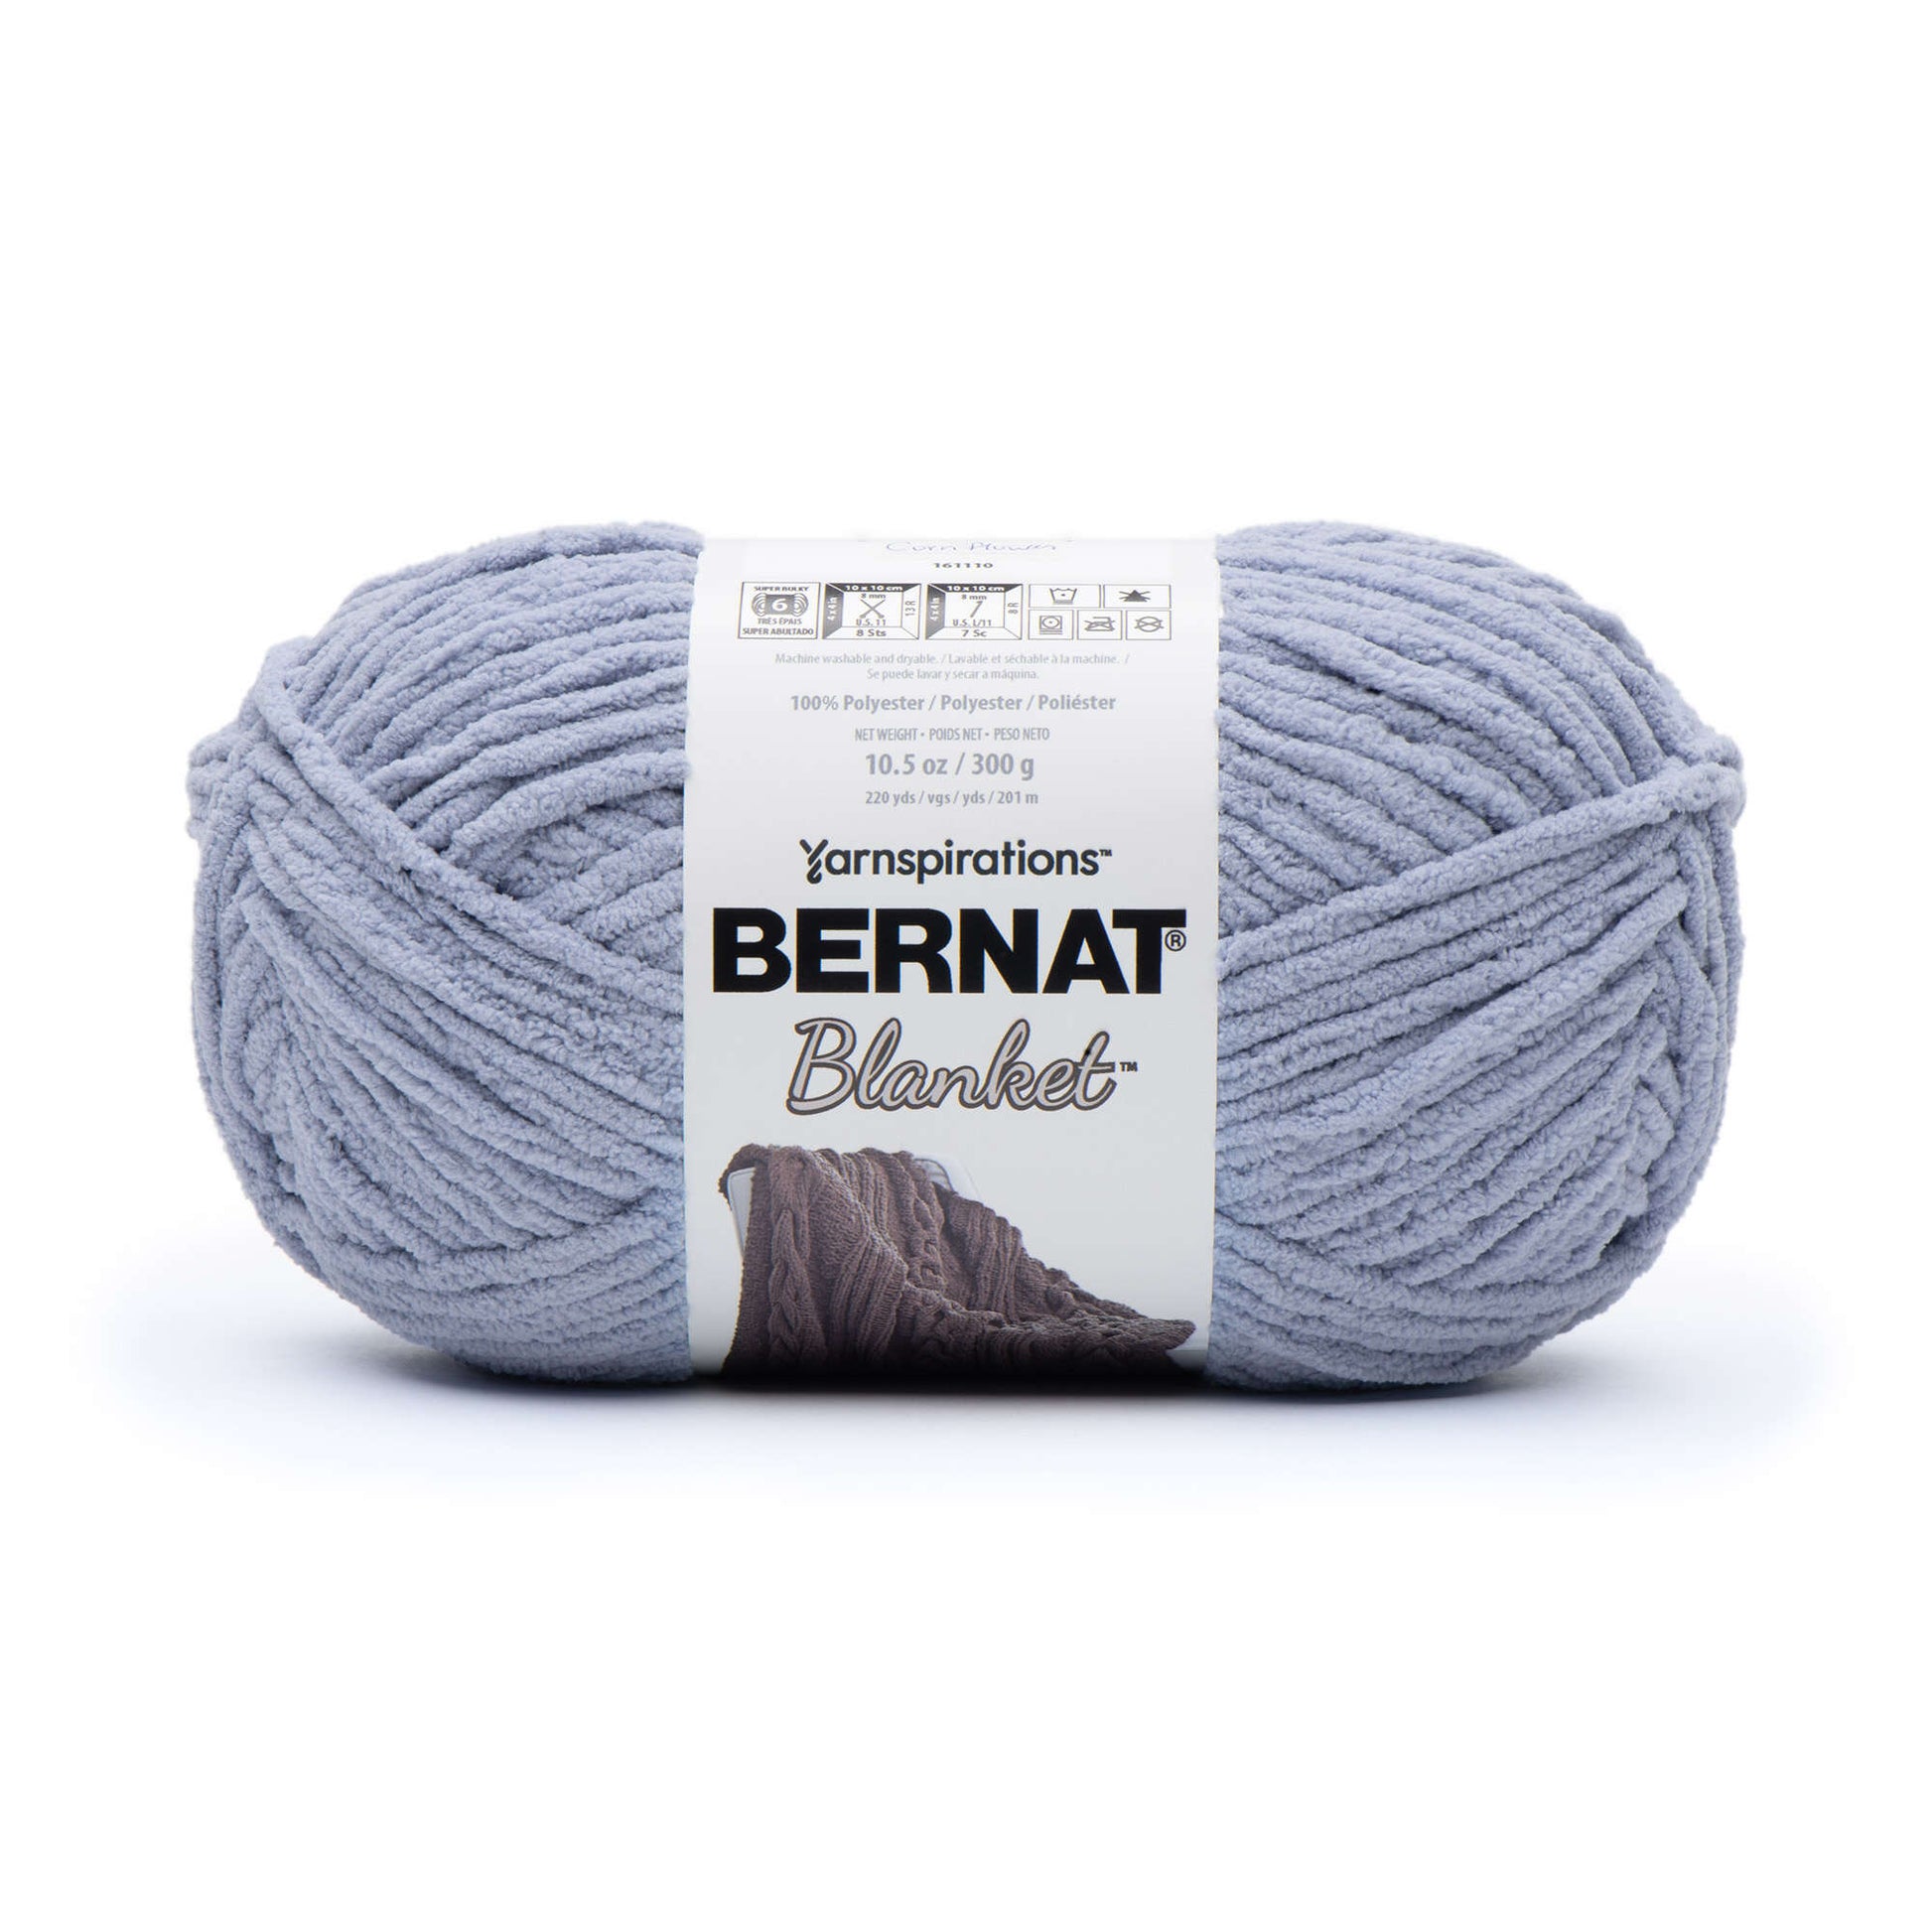 Bernat Blanket Shadow Purple Yarn - 2 Pack of 300g/10.5oz - Polyester - 6  Super Bulky - 220 Yards - Knitting/Crochet